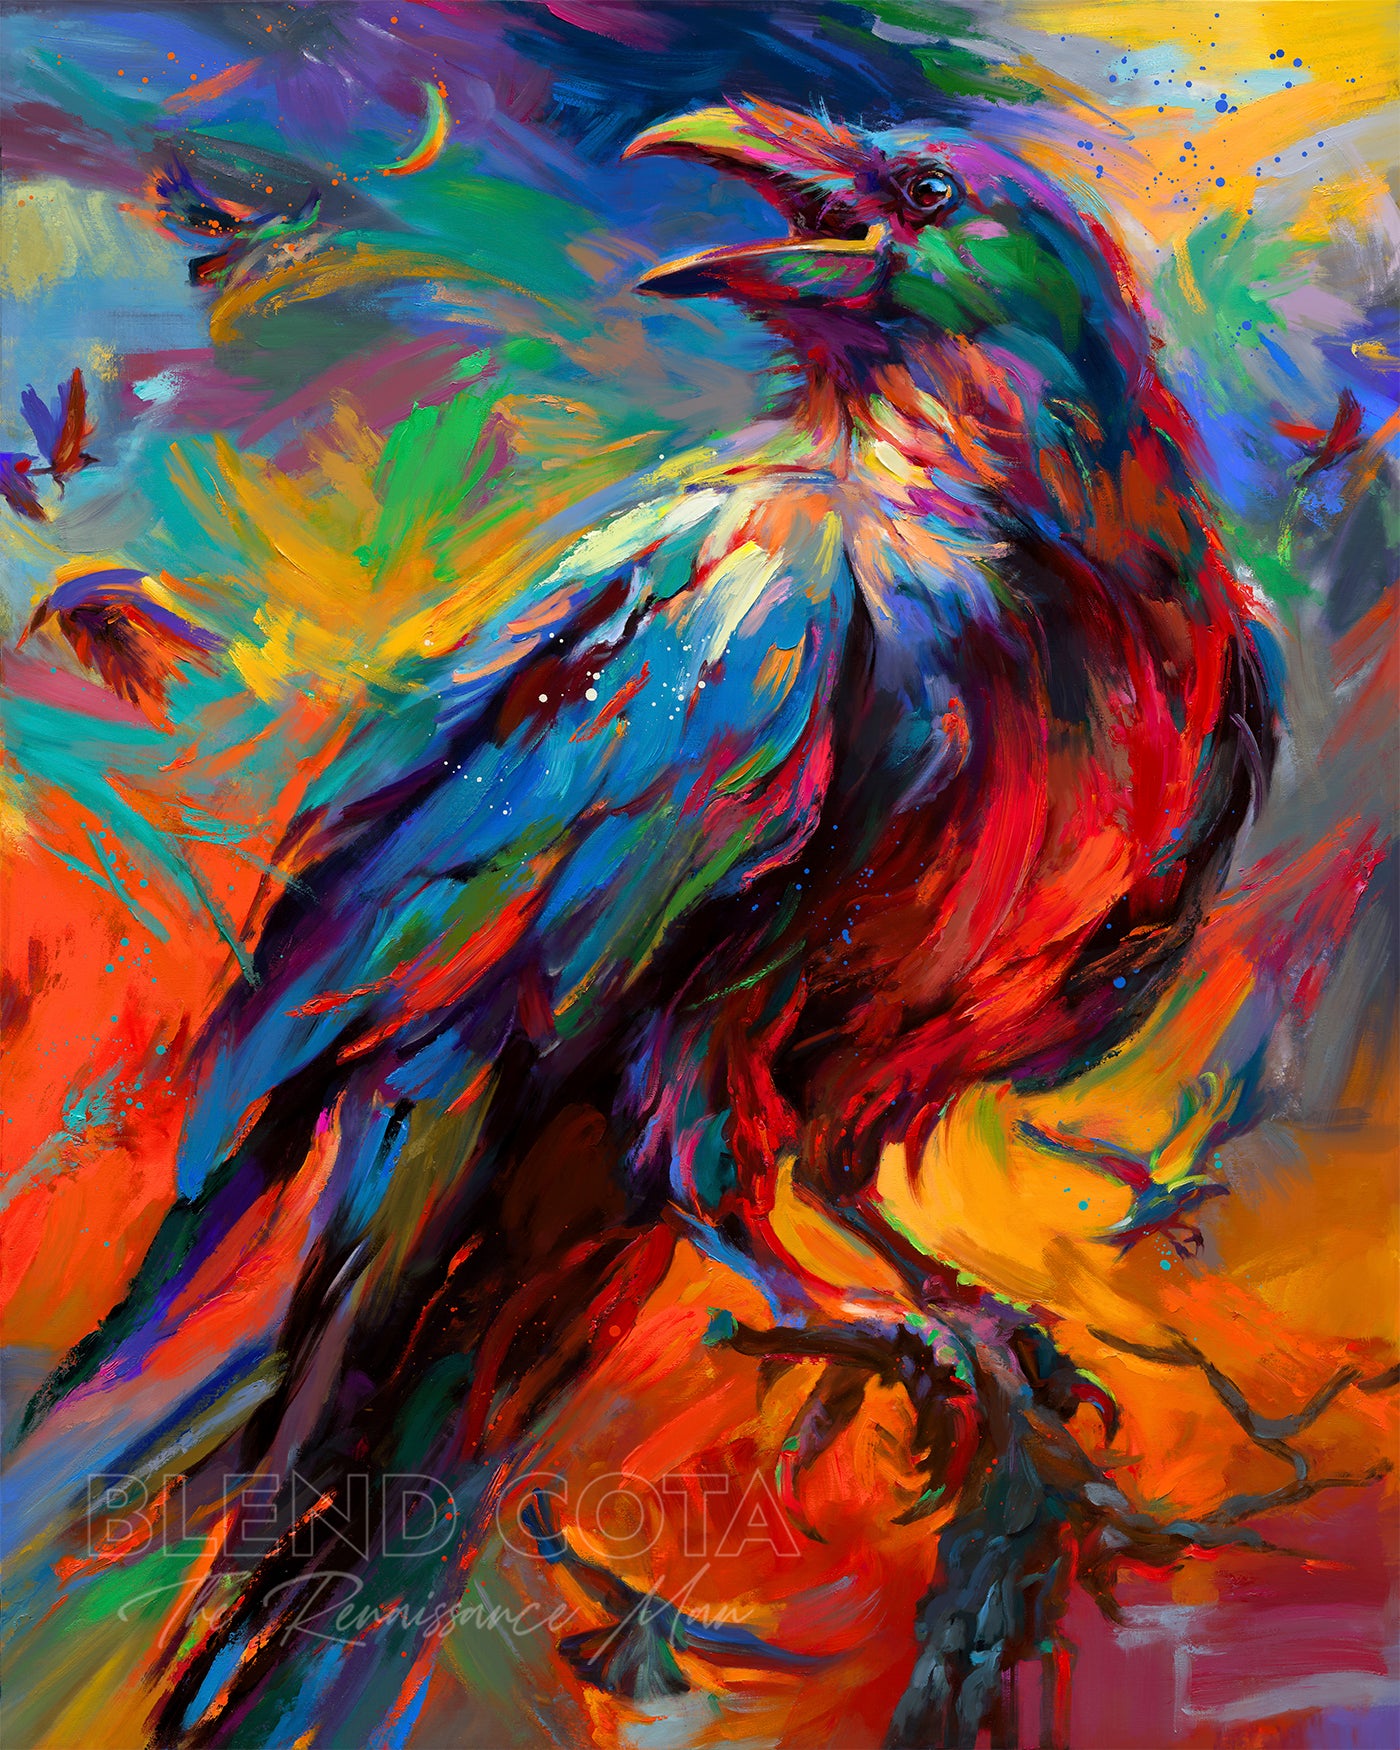 the mystical raven - Blend Cota original oil painting - blended expressionism - blend cota studios art